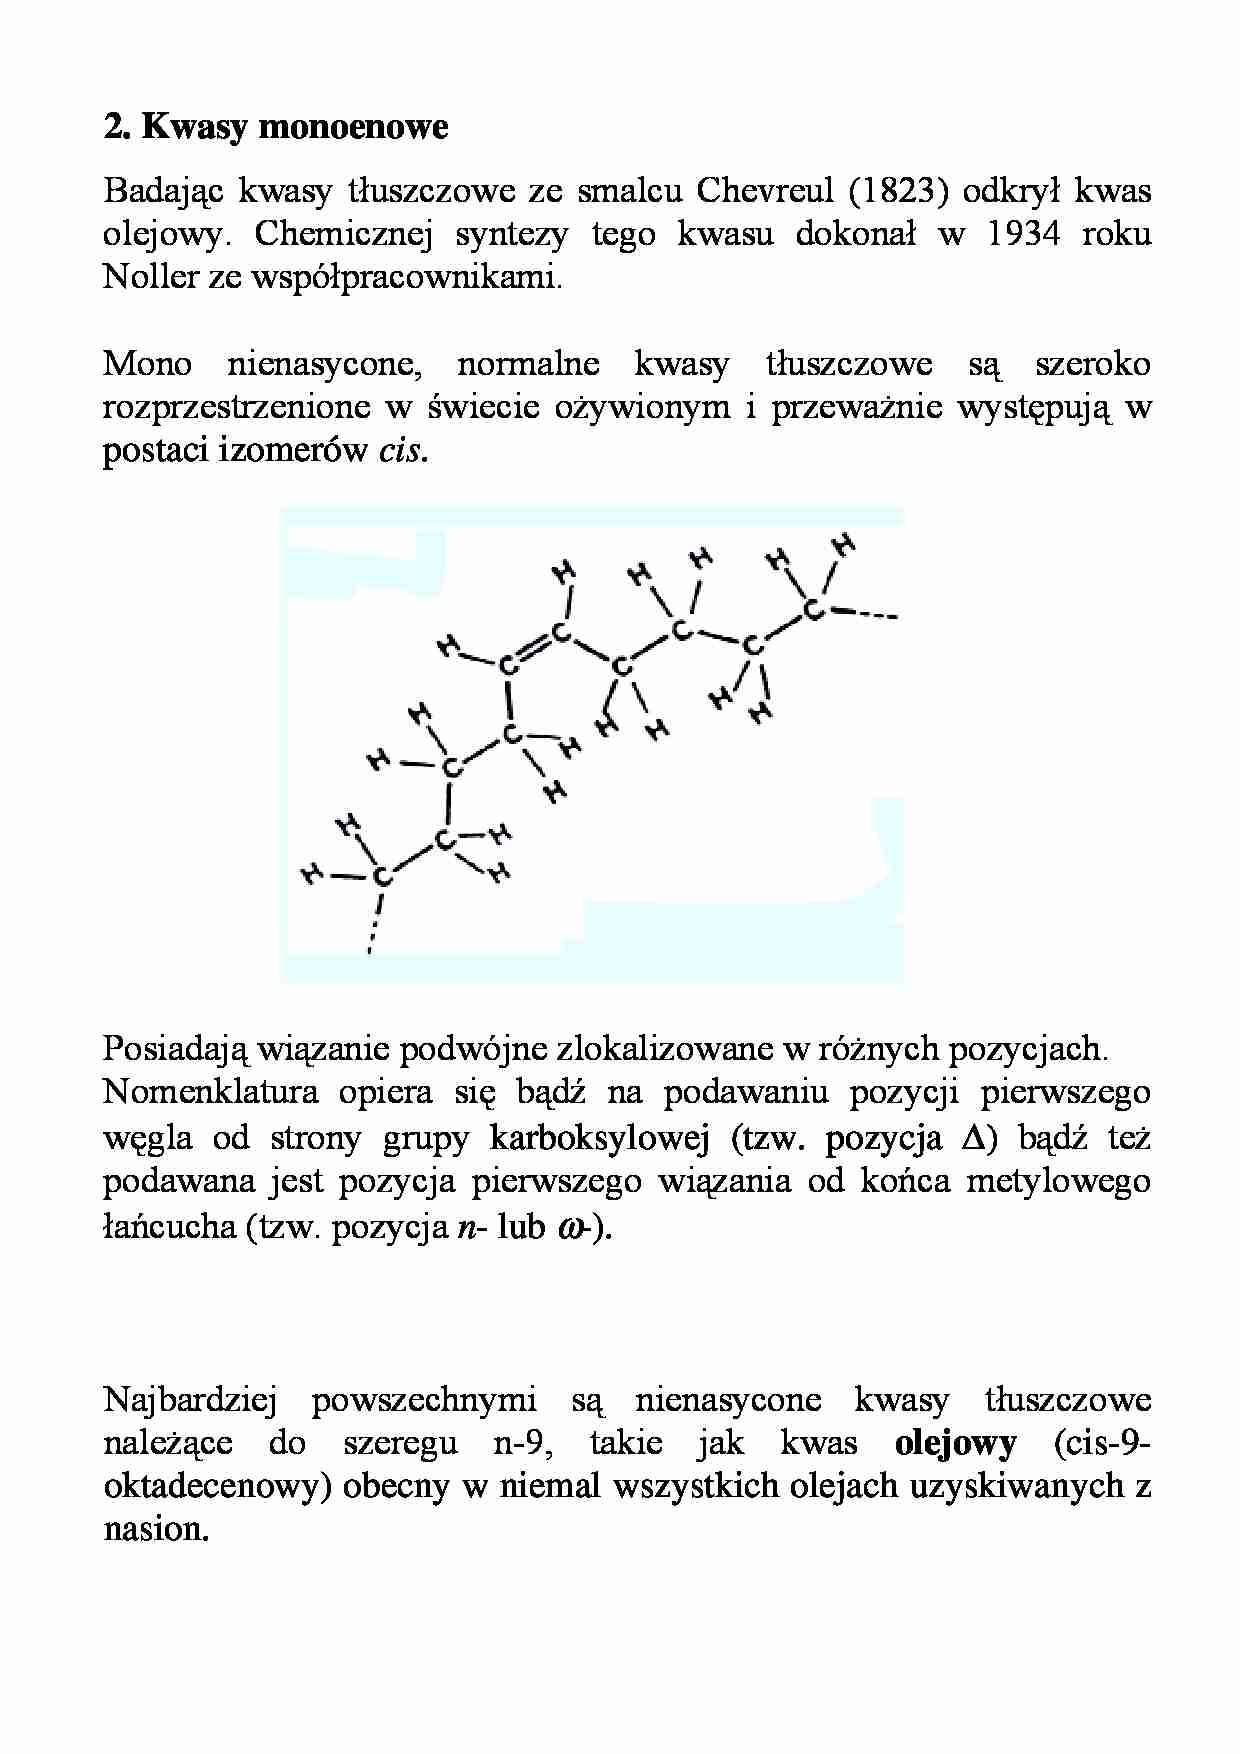 Lipidy - monoenowe - strona 1